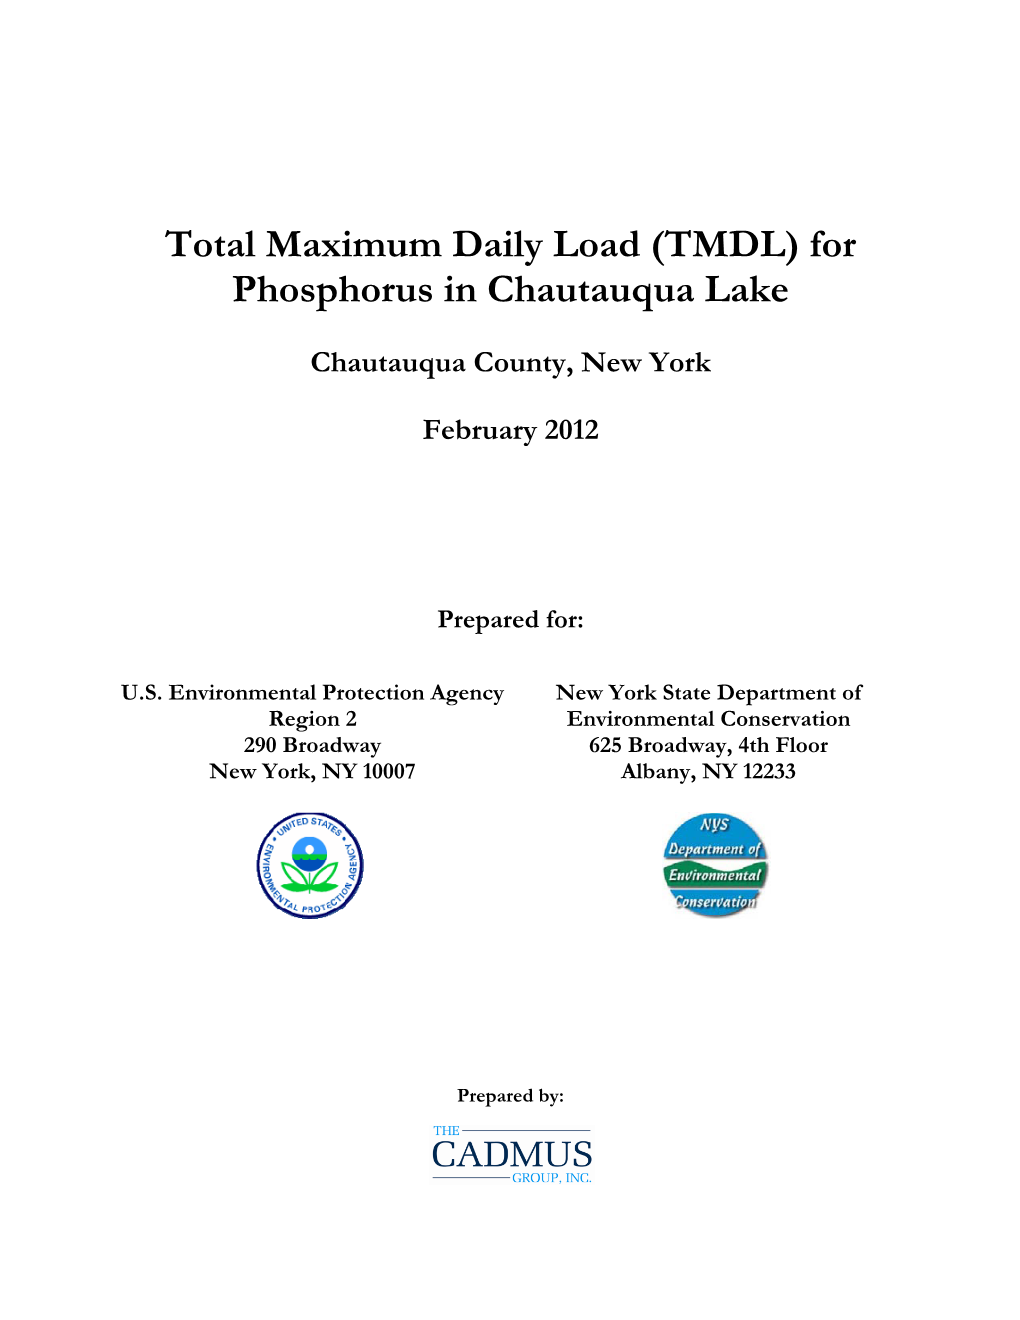 Total Maximum Daily Load (TMDL) for Phosphorus in Chautauqua Lake